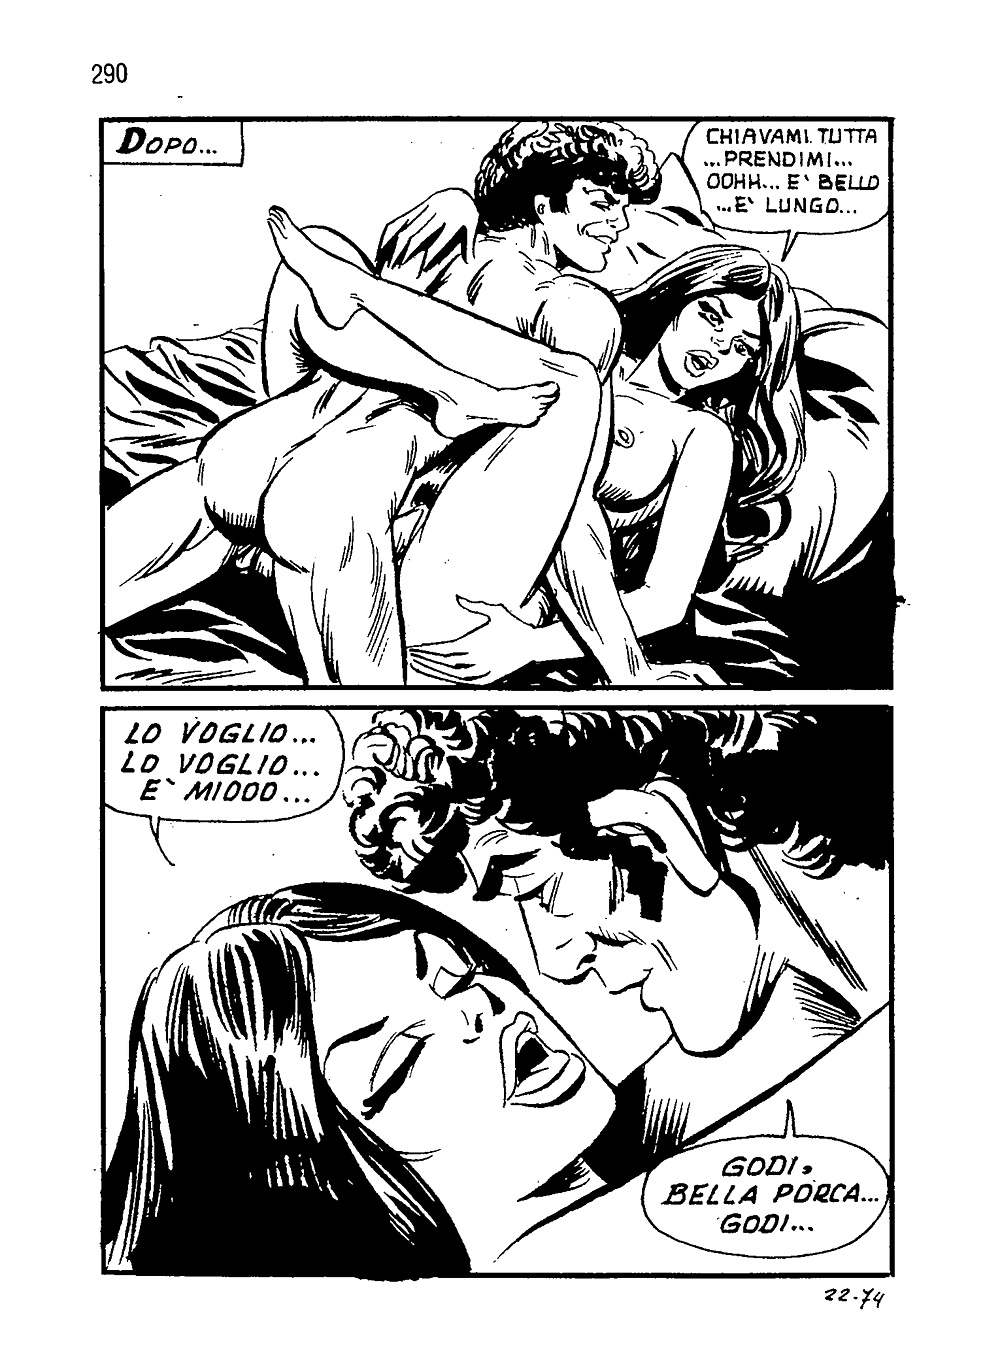 Antiguos comics porno italianos 10
 #39941072